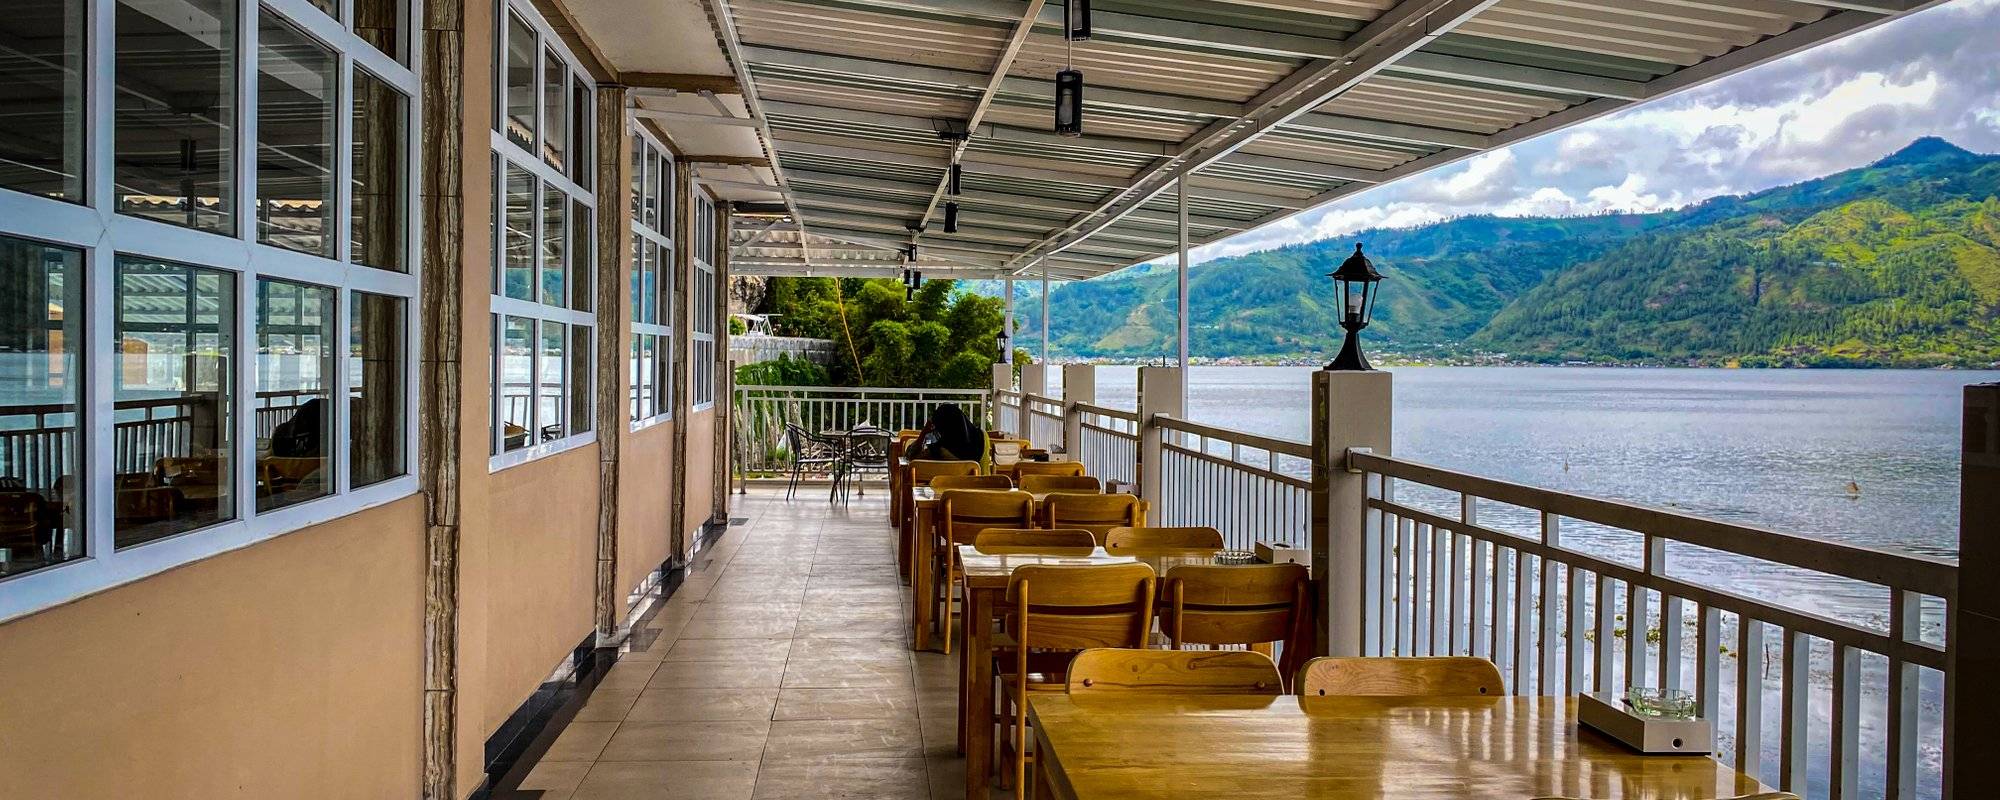 Enjoying Lake Views From The Grand Renggali Hotel Restaurant